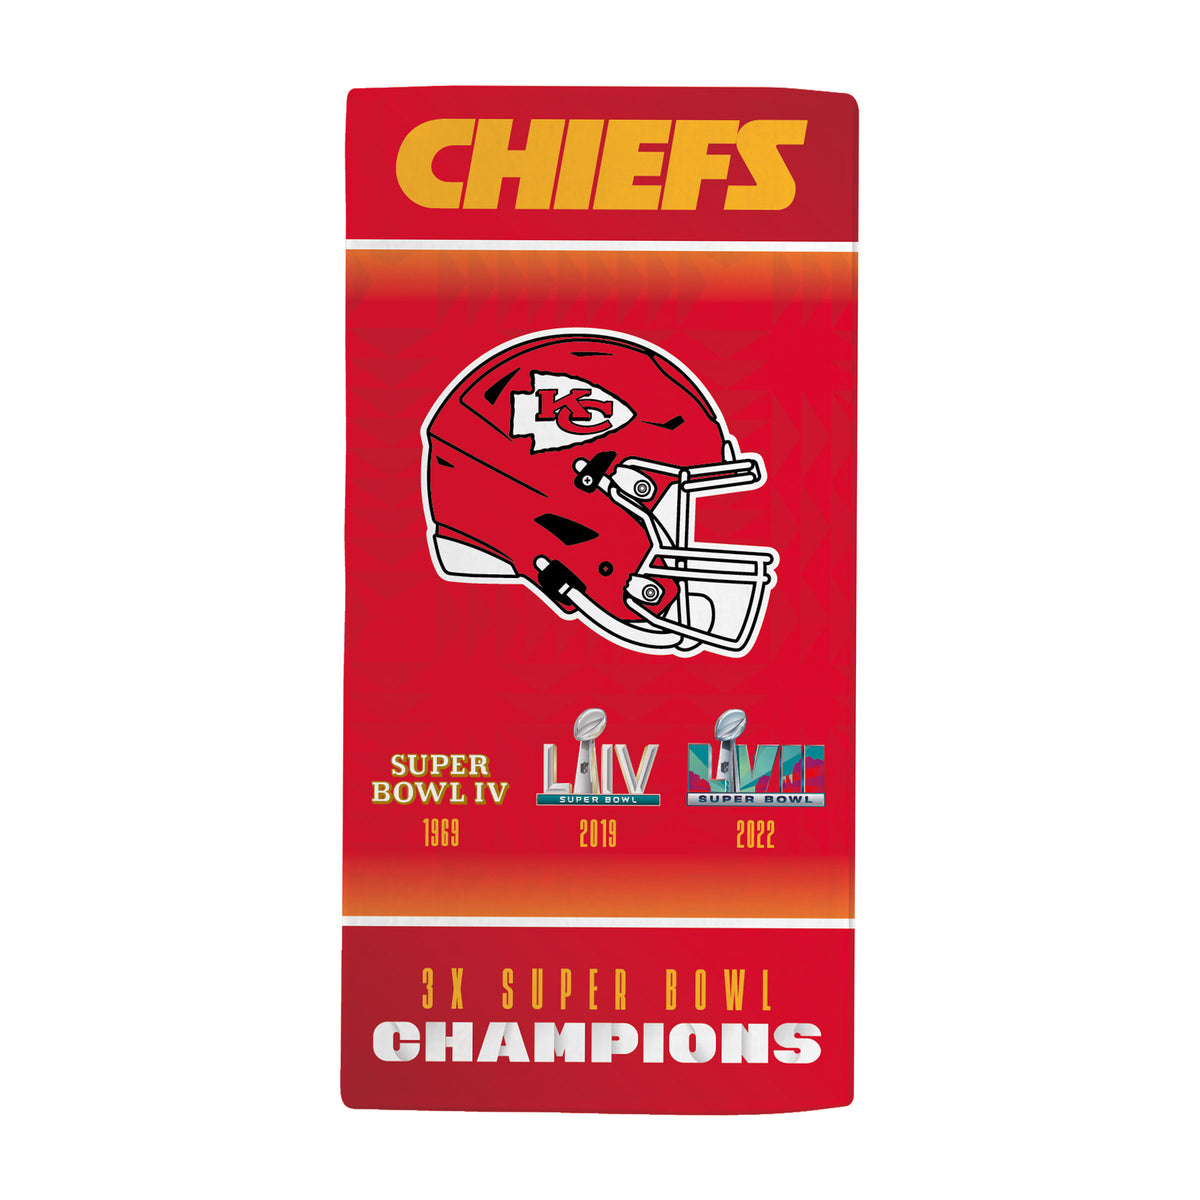 Kansas City Chiefs Super Bowl LVII 3x Champions Towel (150x80cm)